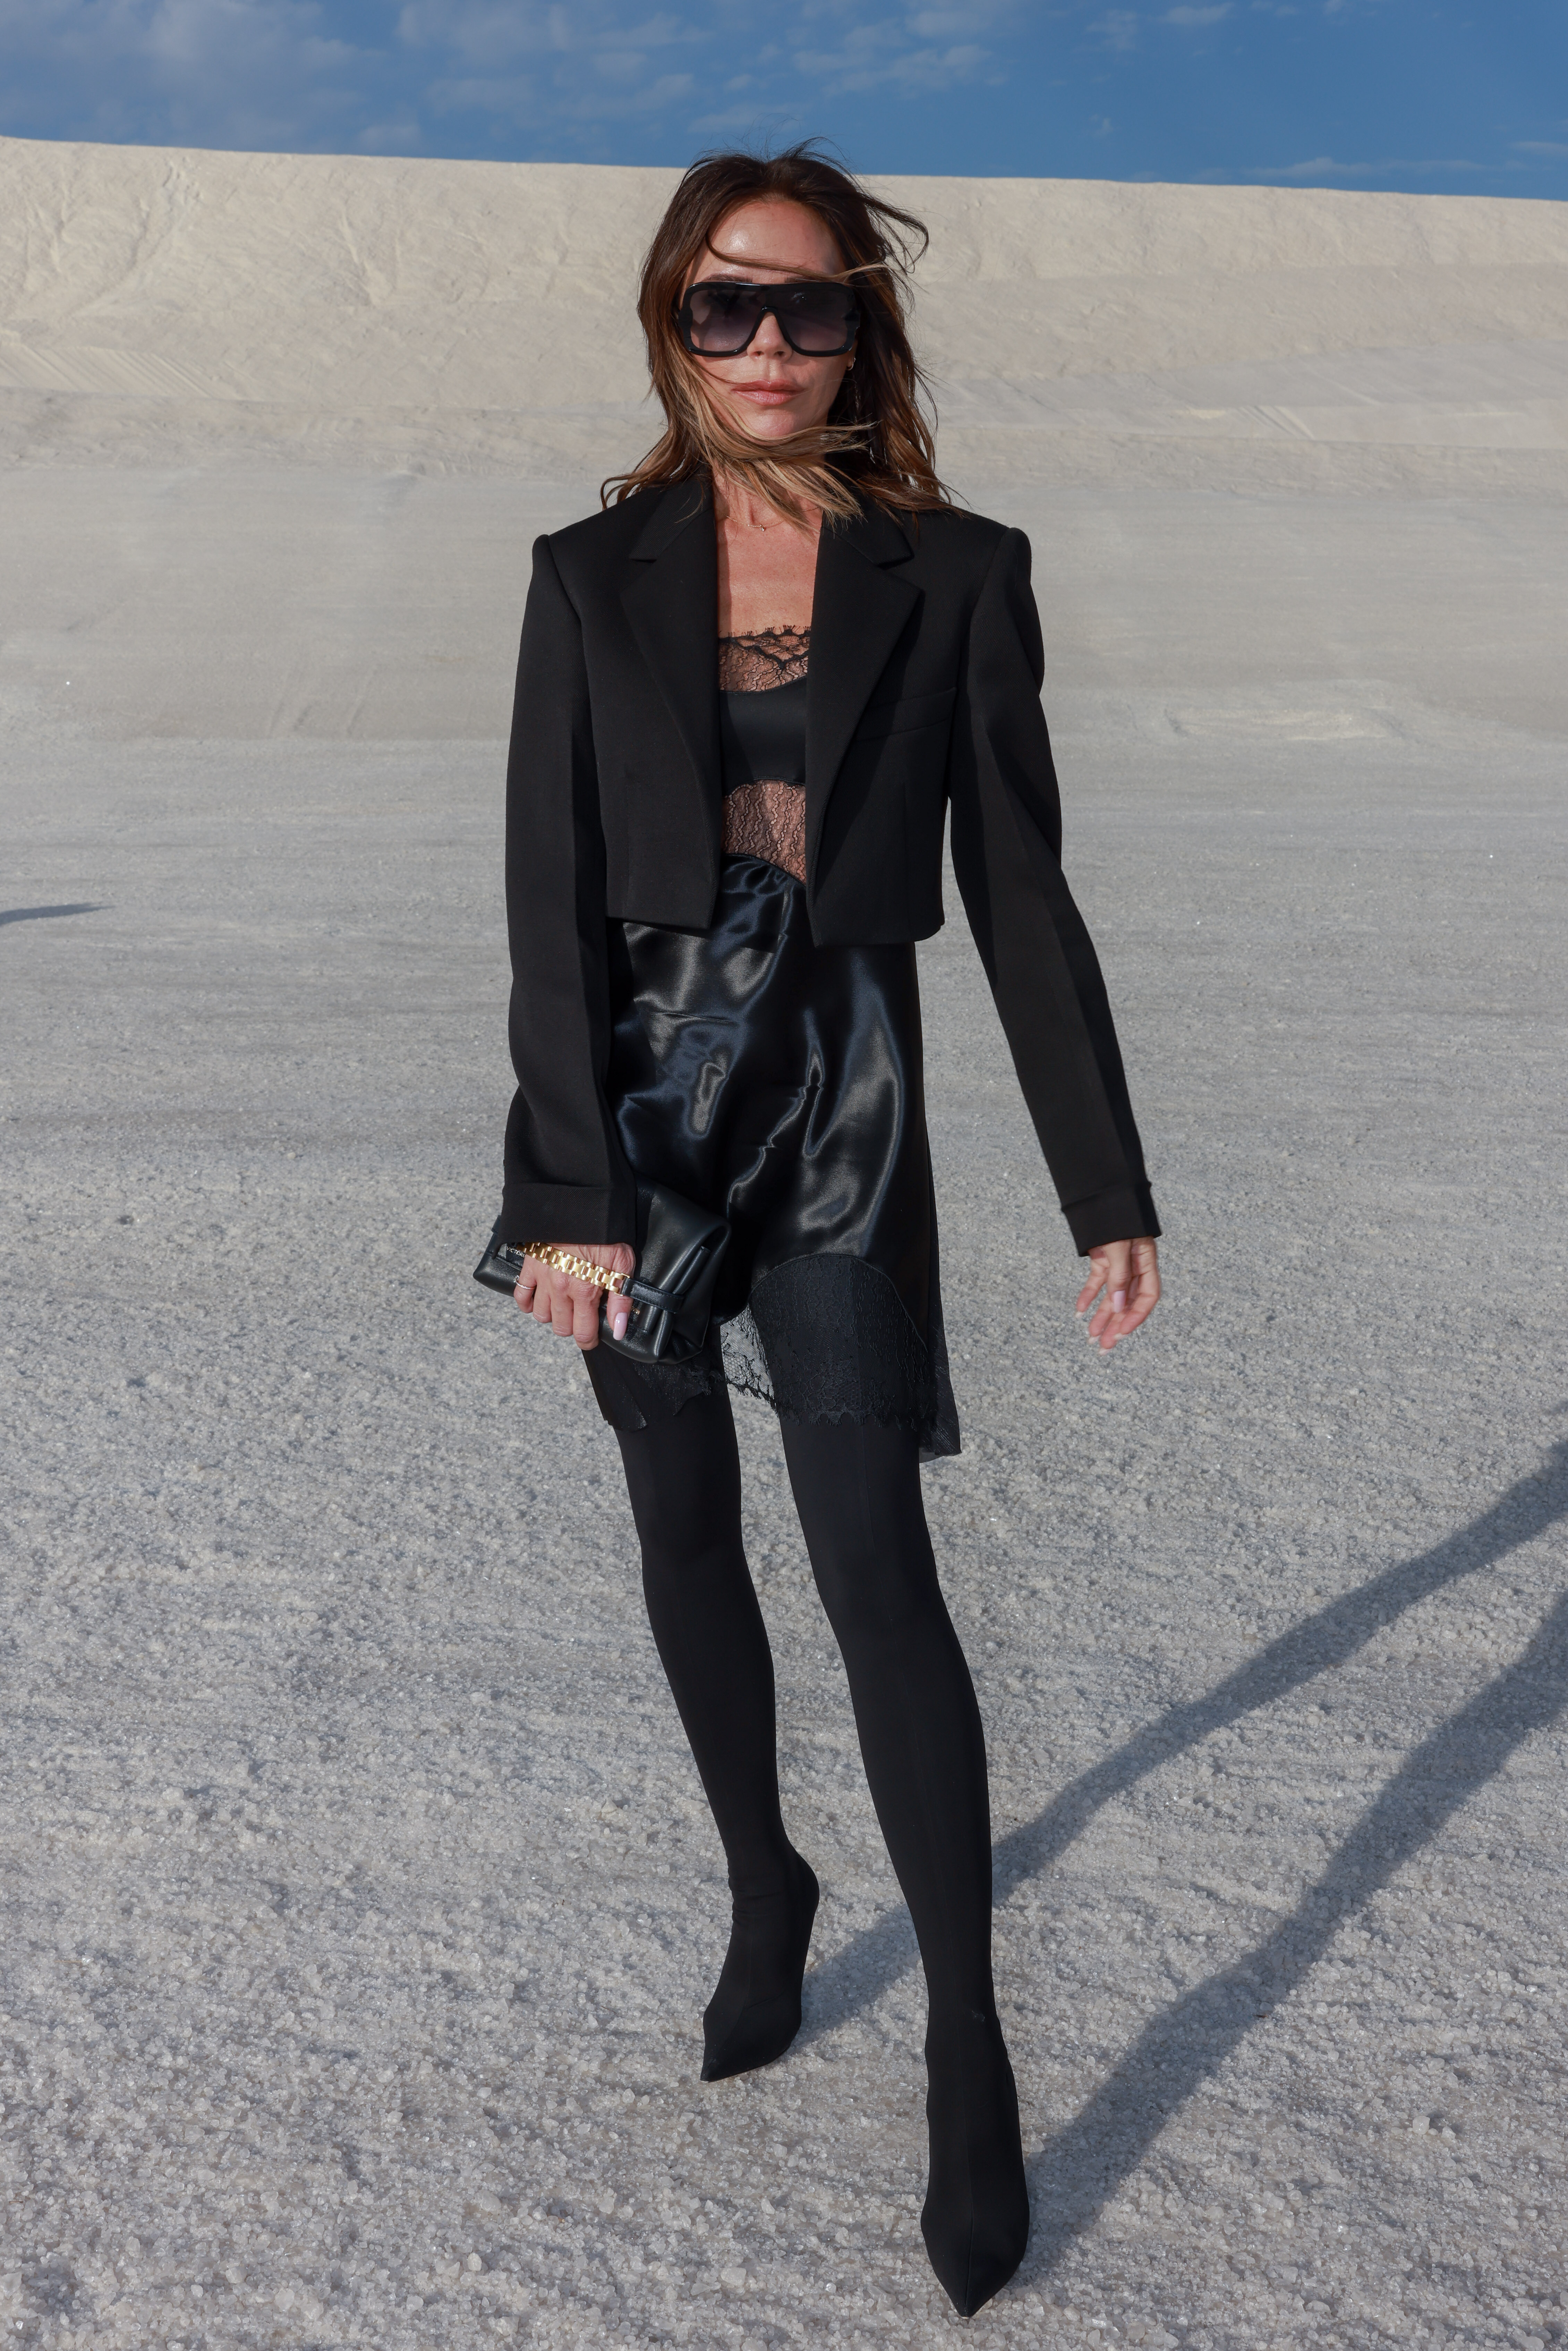 Victoria Beckham style: Victoria Beckham raises some eyebrows wearing black tights in 30-degree heat